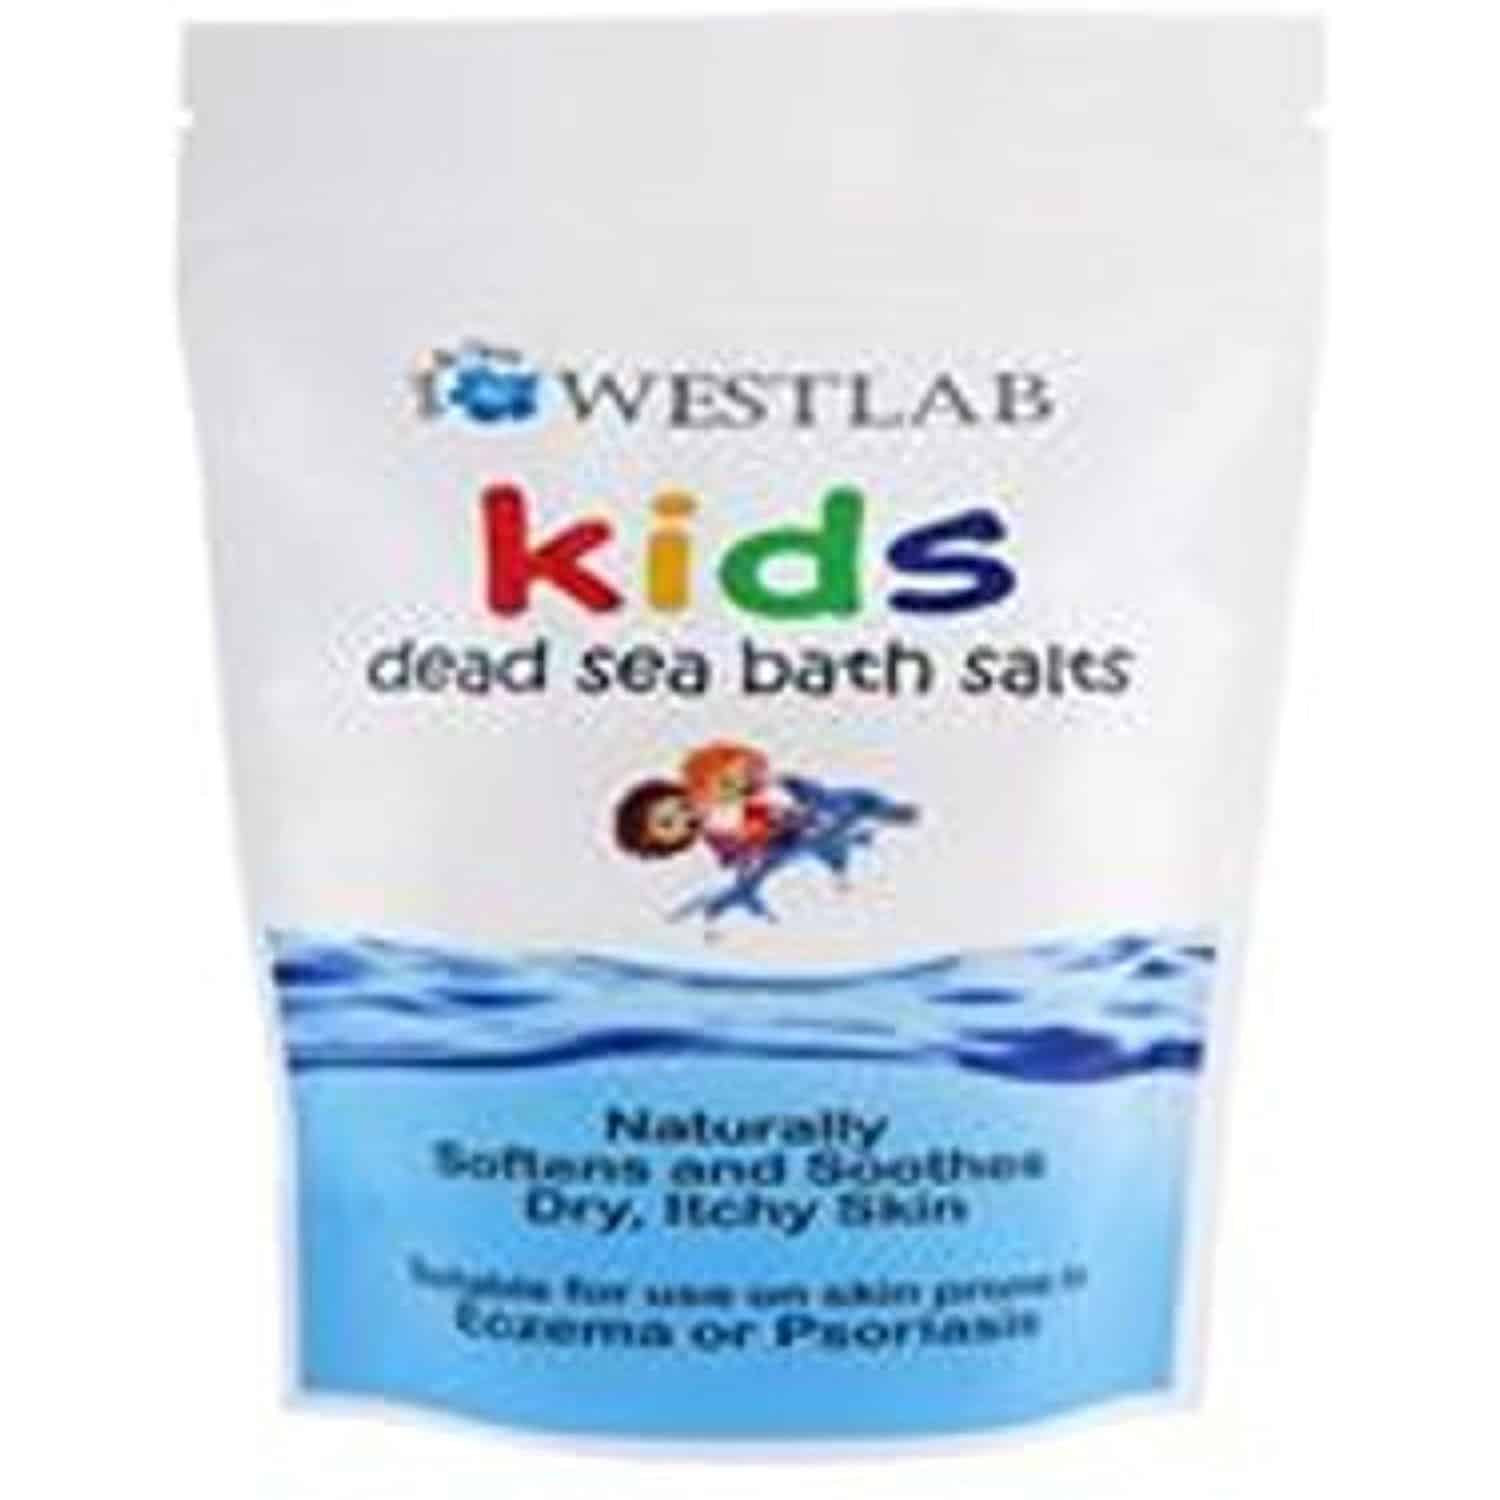 Dead Sea Salt Bath Baby Eczema